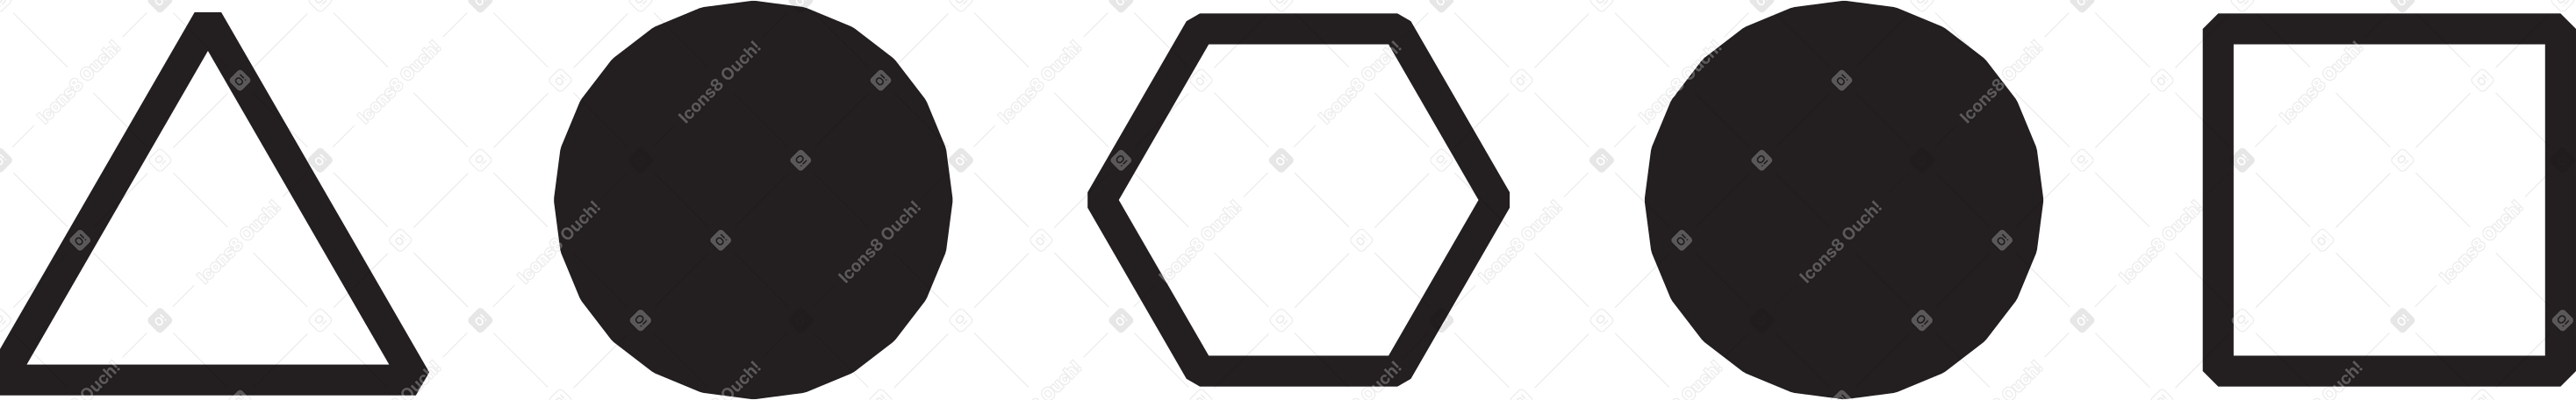 figuras geometricas PNG, SVG